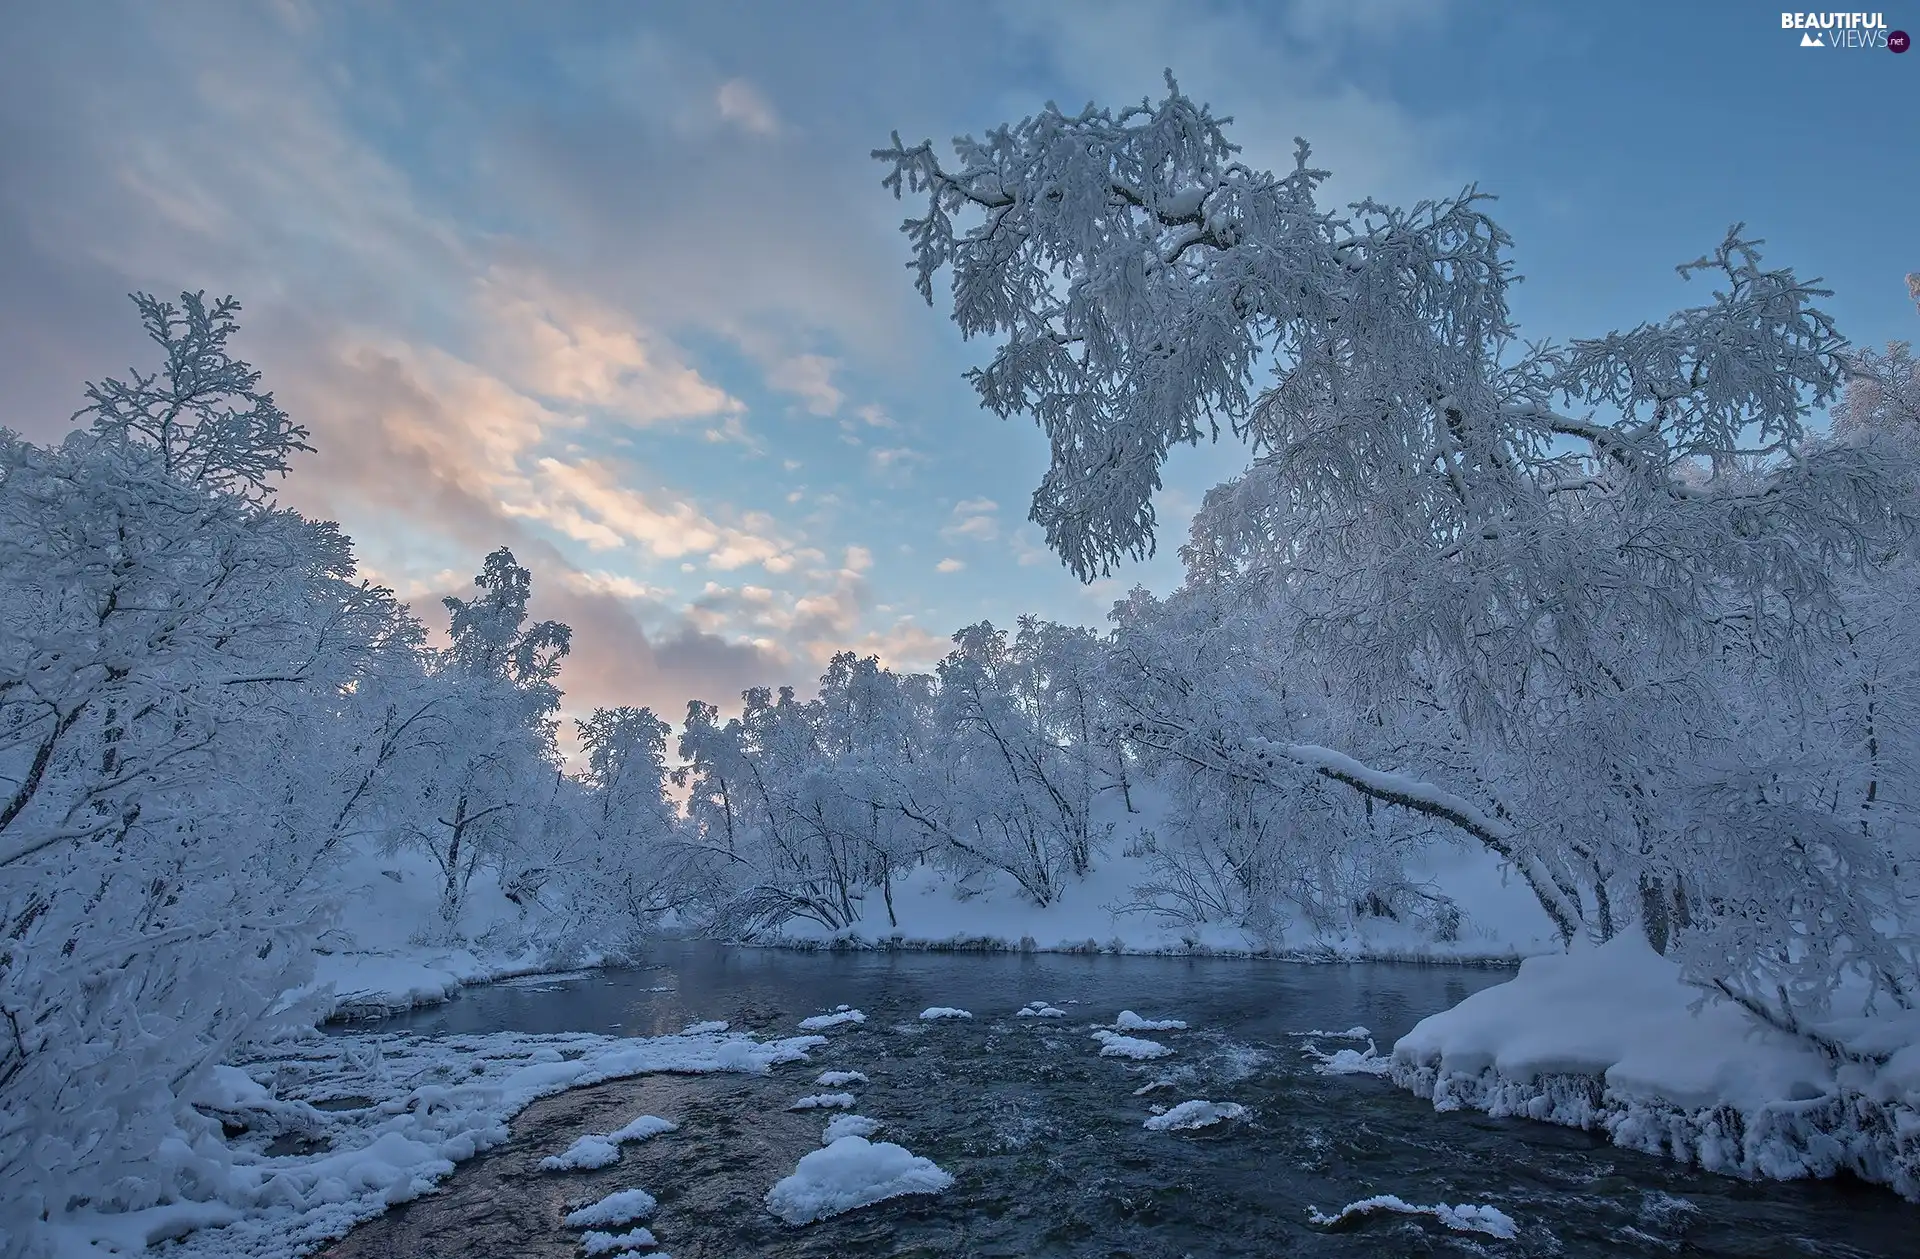 Kaamasmukka Village, Kaamasjoki River, Lapland, Finland, trees, viewes, River, Snowy, winter